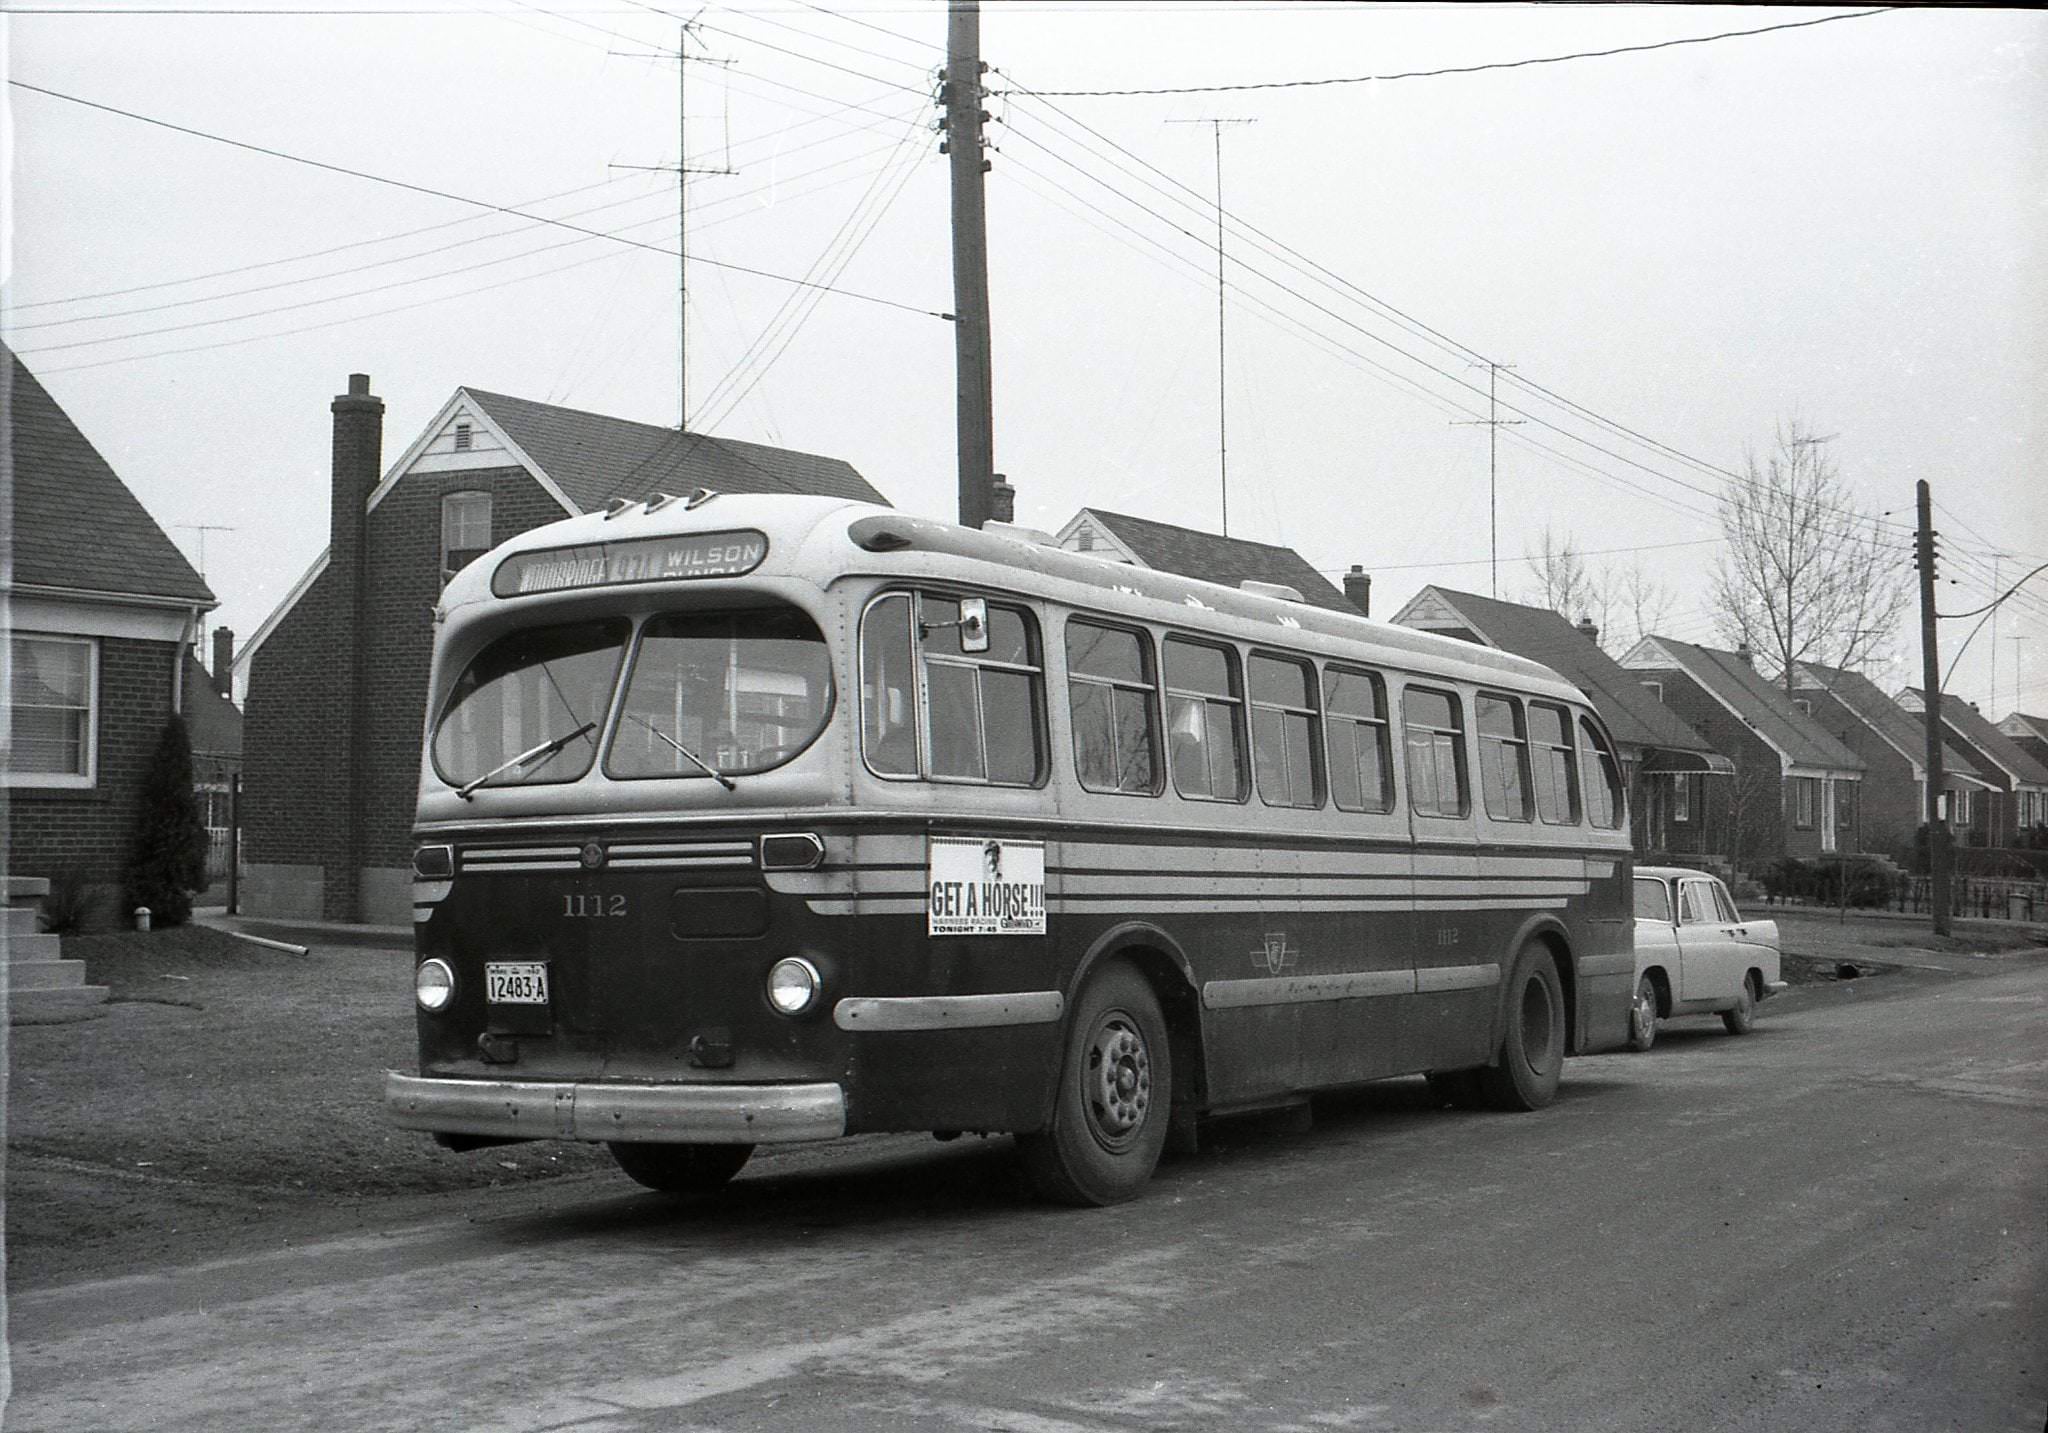 TTC Bus 1112 on Blondin, looking northeast in 1962.